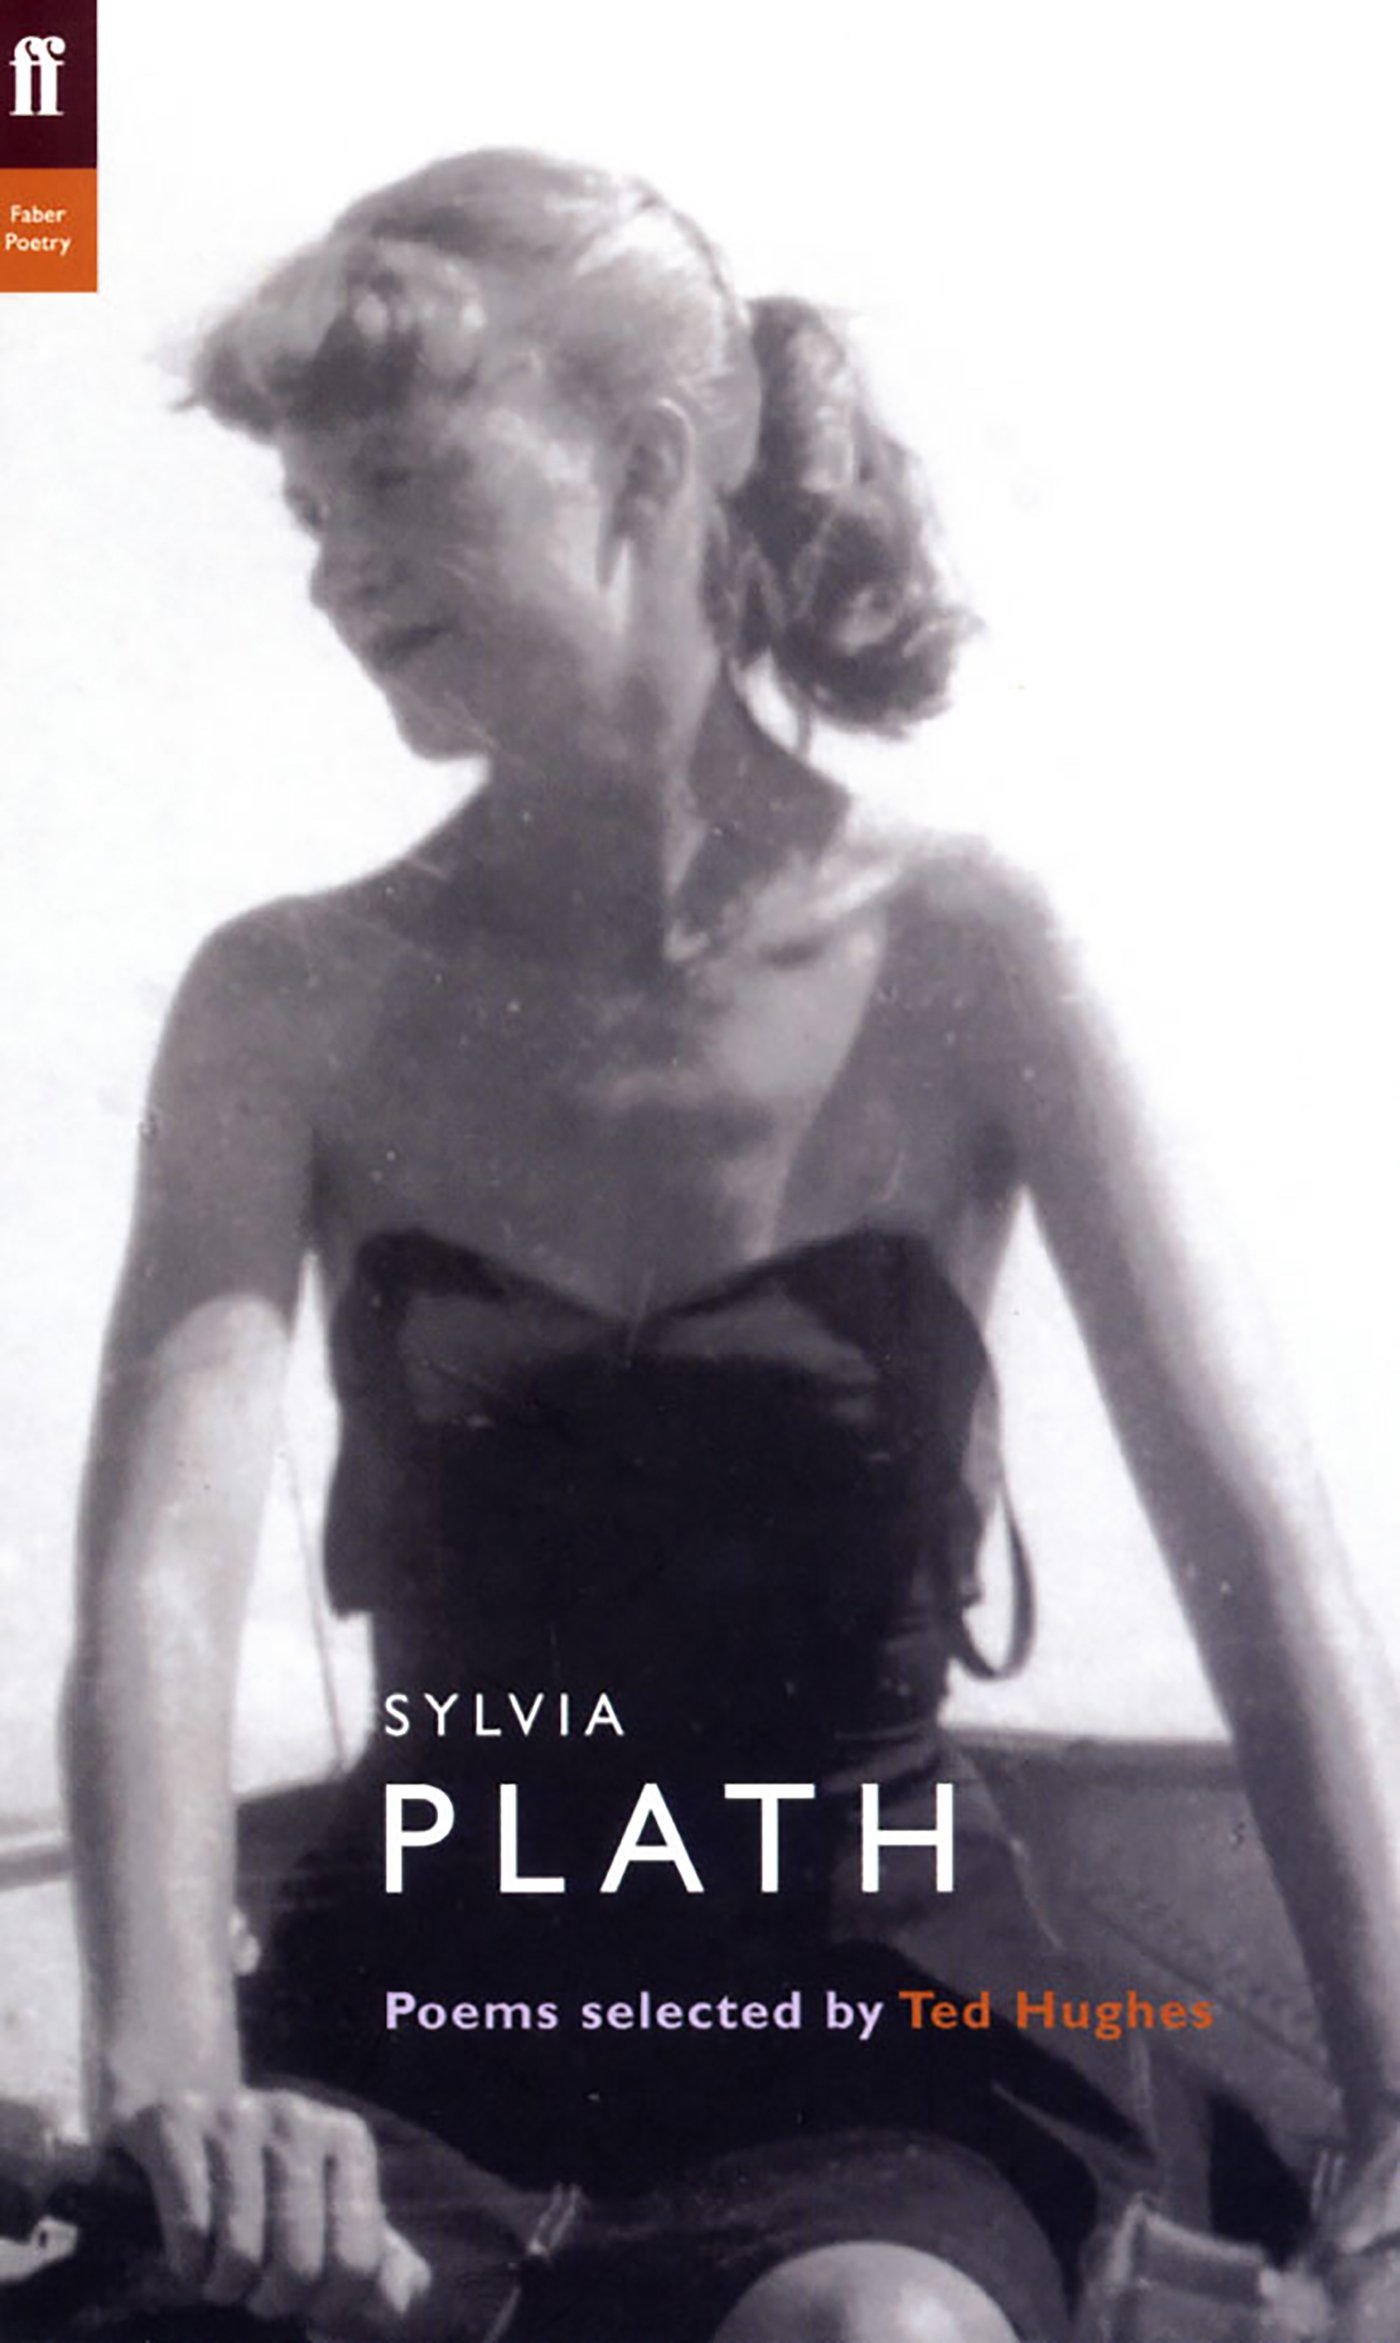 The Faber Plath